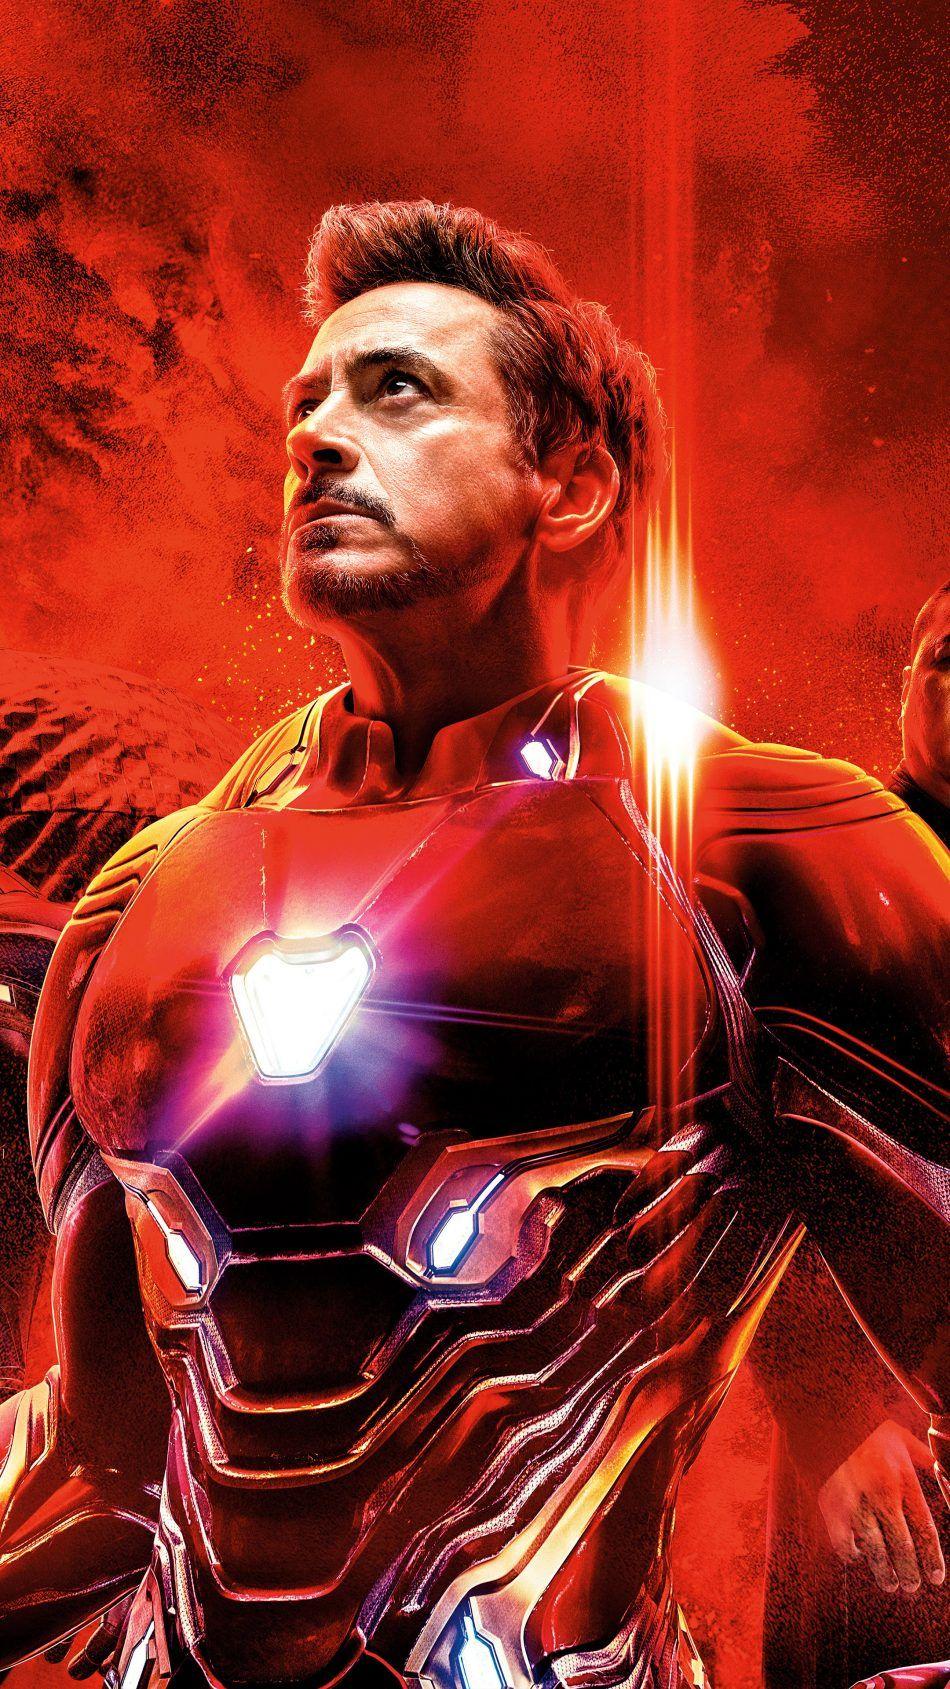 Iron Man In Avengers Endgame 4K Ultra HD Mobile Wallpaper. Iron man poster, Iron man avengers, Iron man HD wallpaper